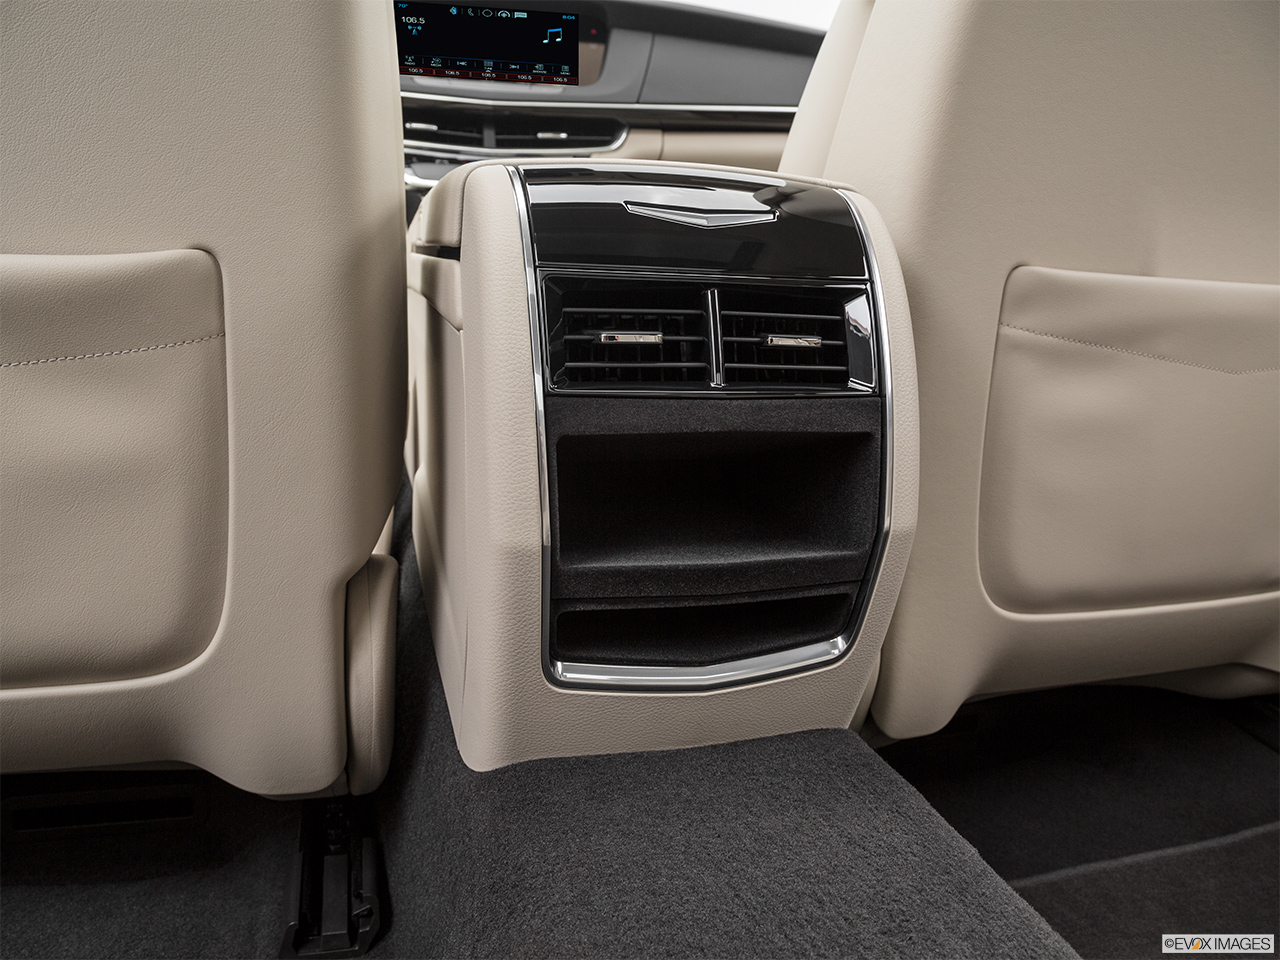 2016 Cadillac CT6 Base Rear A/C controls. 